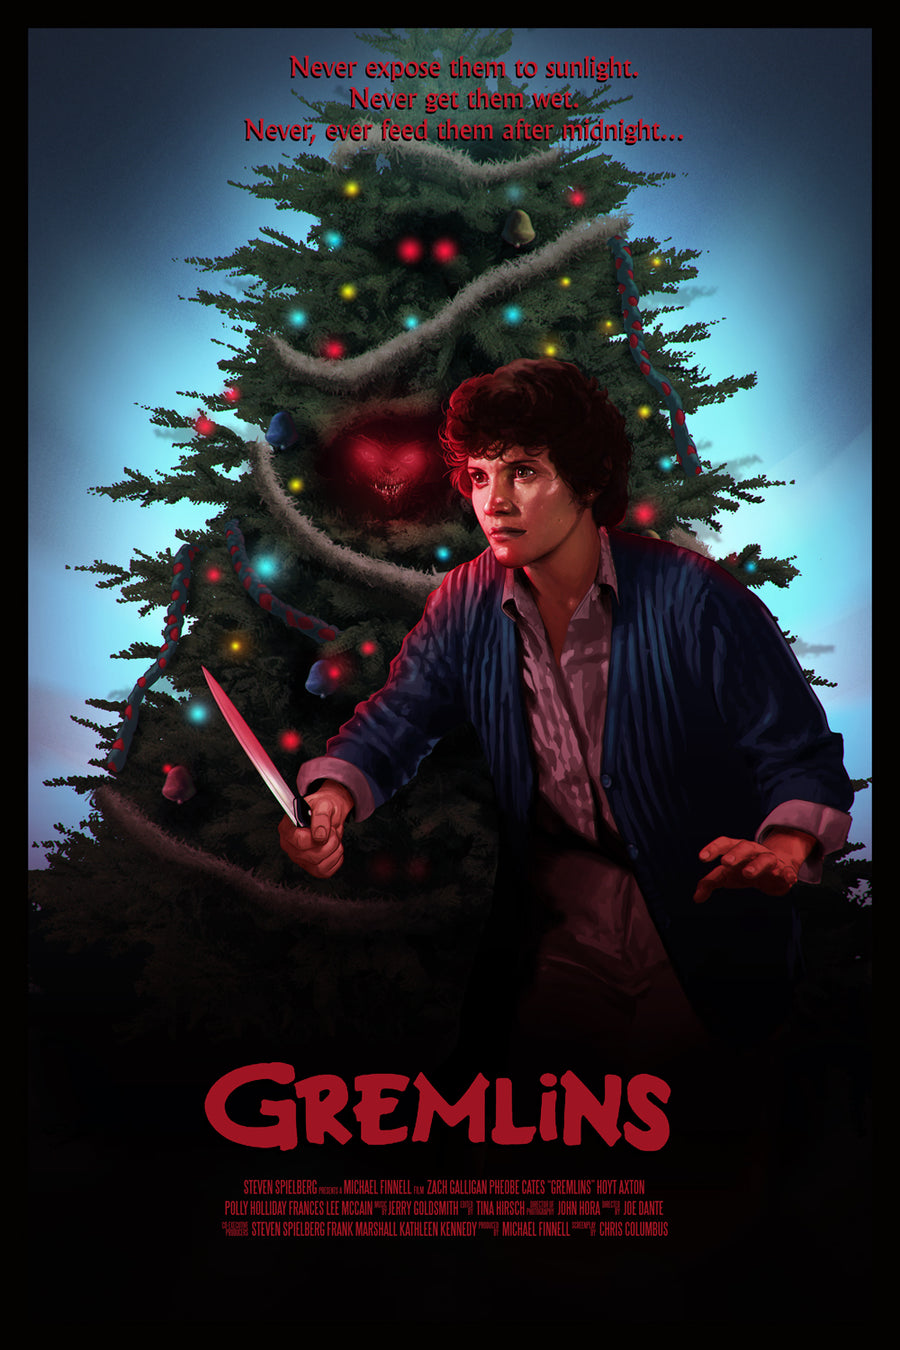 Tres Corderos on X: Gremlins 35th anniversary. 4k edition. Digital  illustration. Movie poster. @talenthouse artwork contest. @joe_dante # gremlins #gremlins4k #fanart  / X